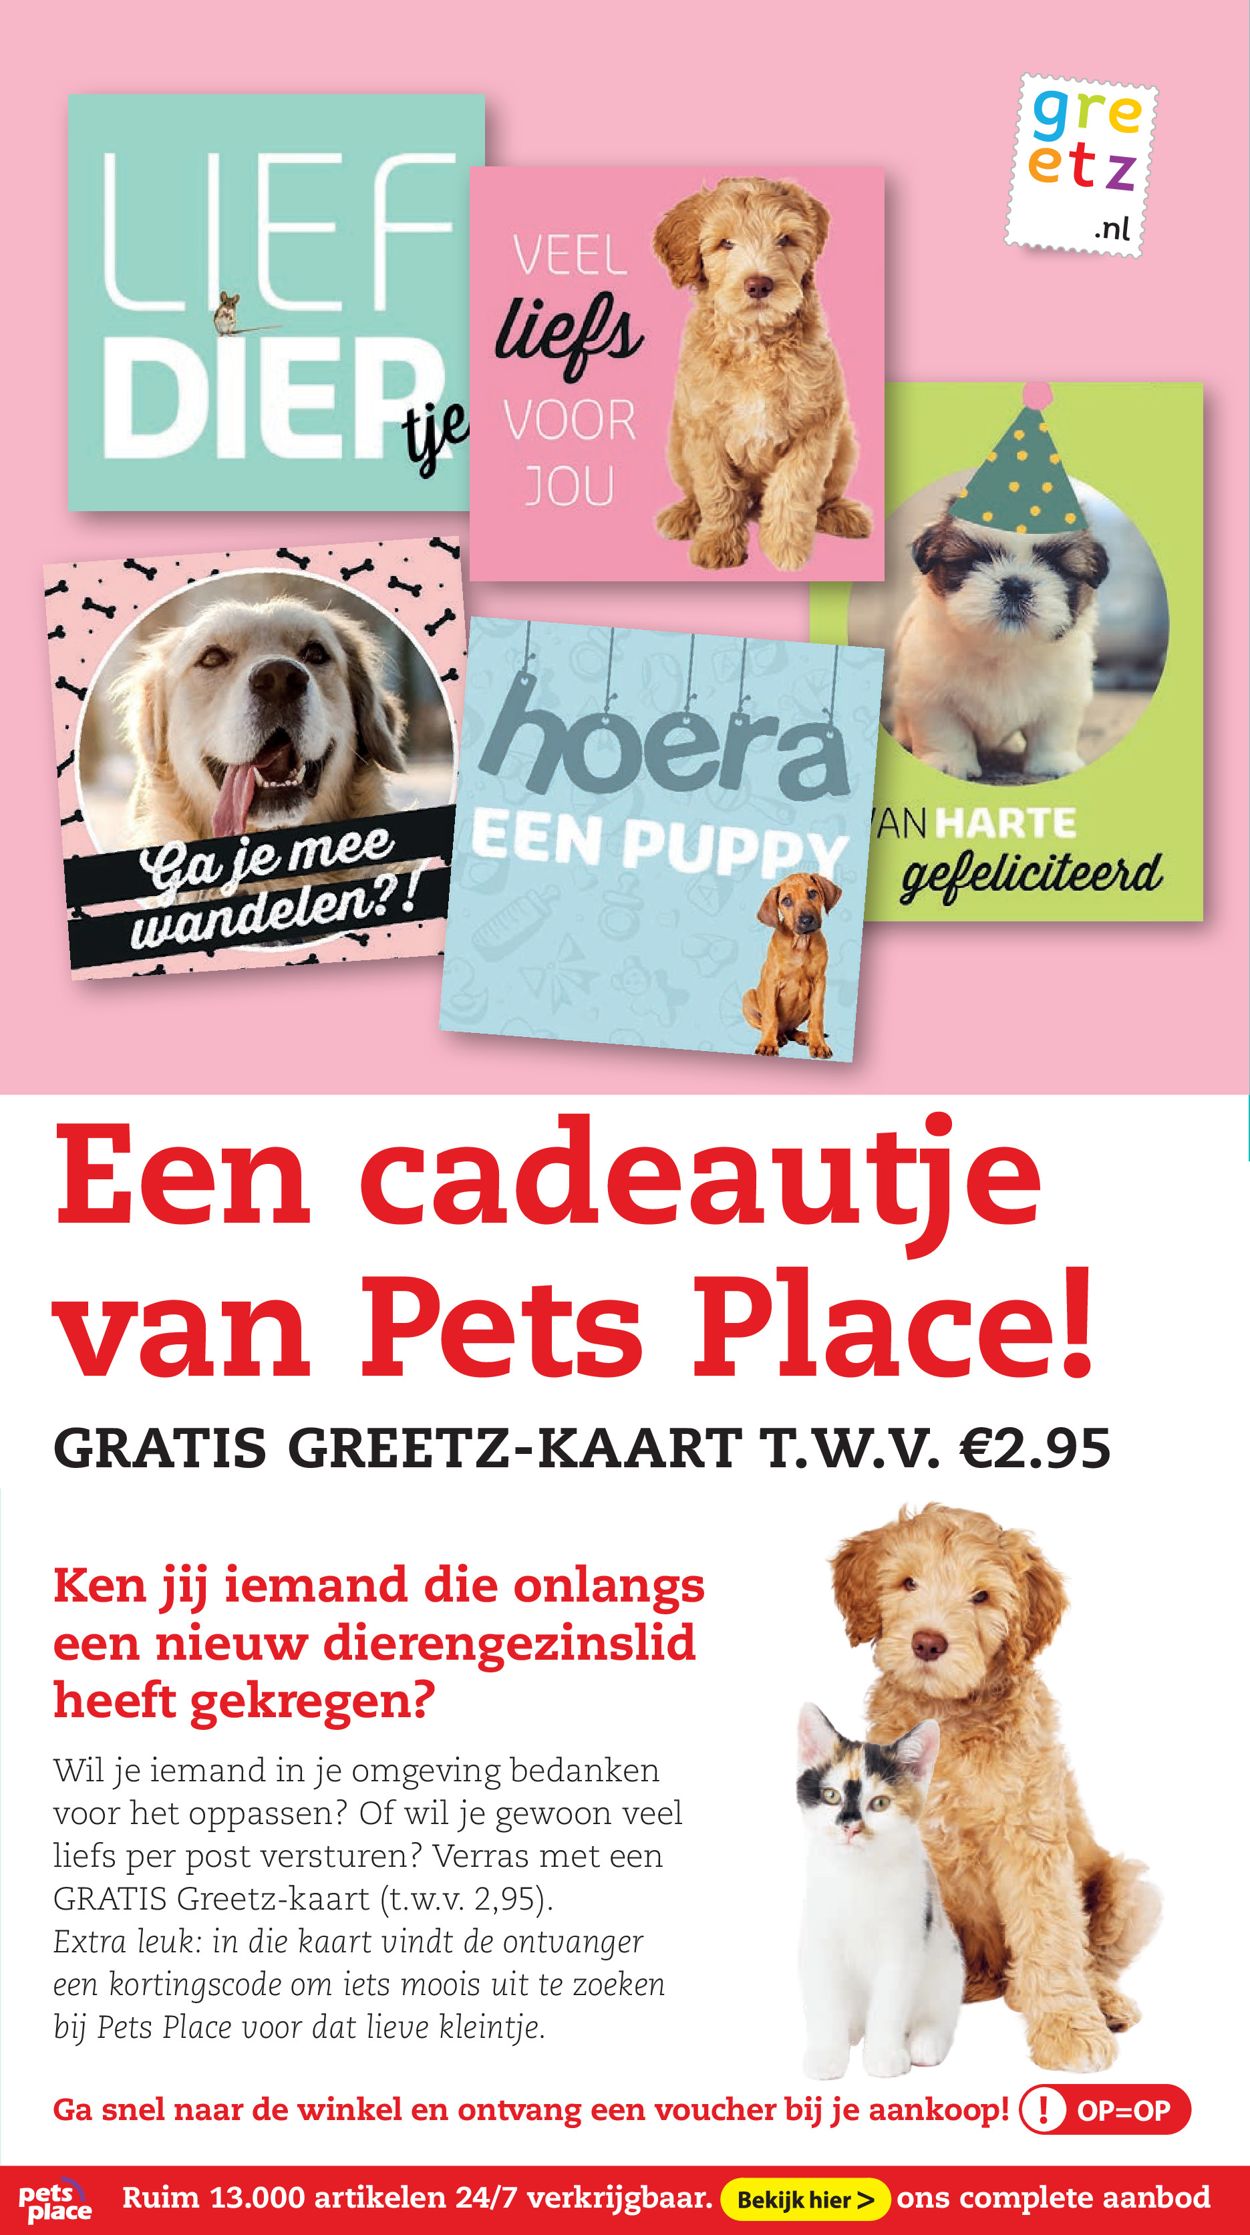 Catalogus van Pets Place van 22.06.2020